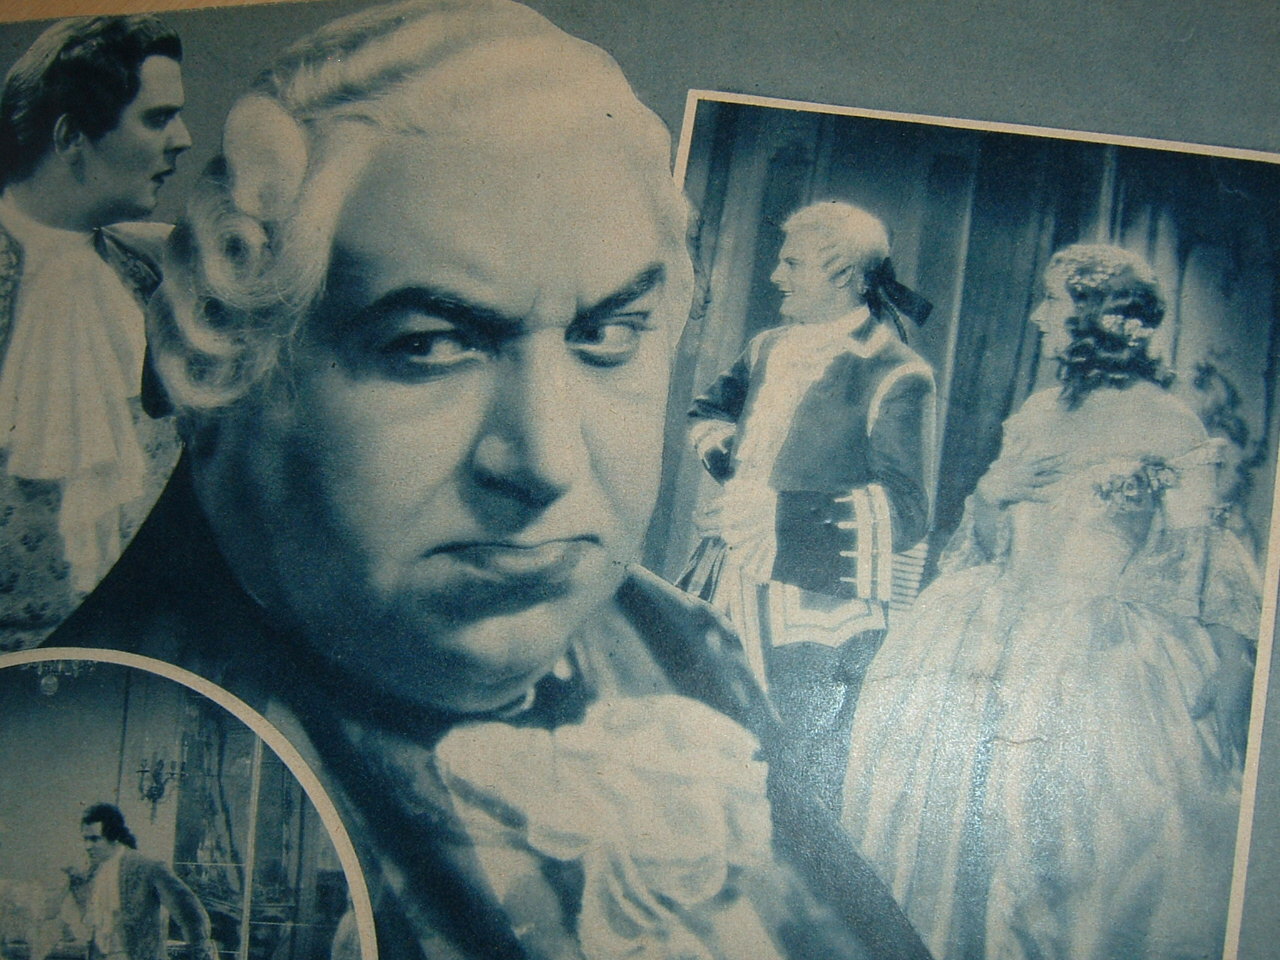 FOTO: links und rechts “Kurt Gerron” als König Ludwig.